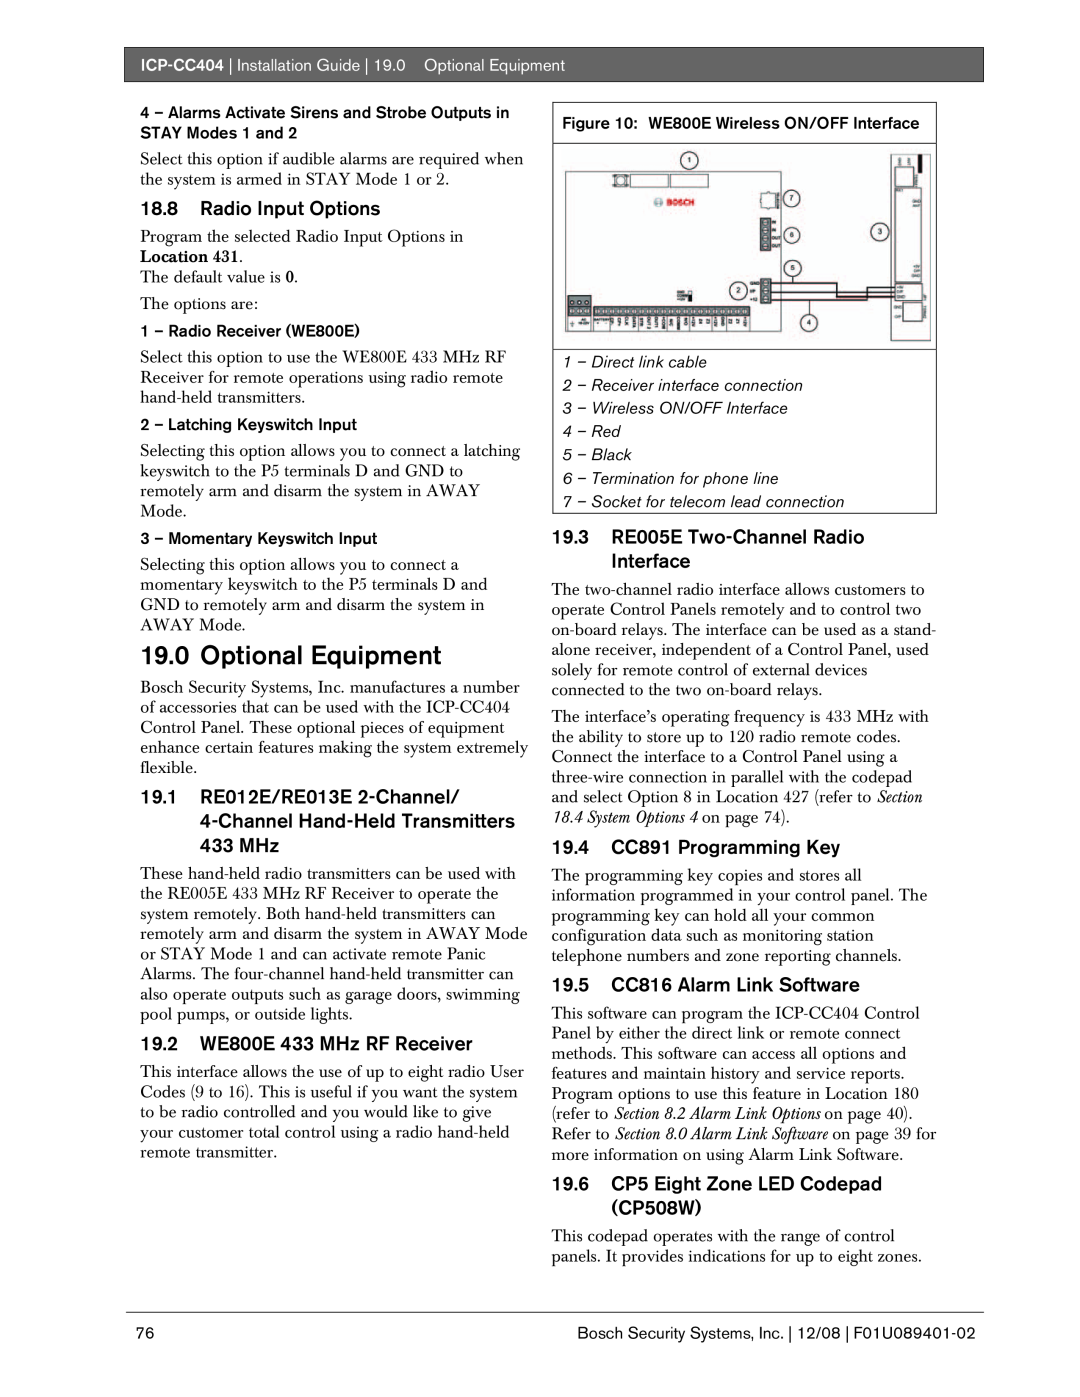 Bosch Appliances ICP-CC404 manual Optional Equipment, 18.8Radio Input Options, 19.1RE012E/RE013E 2-Channel 